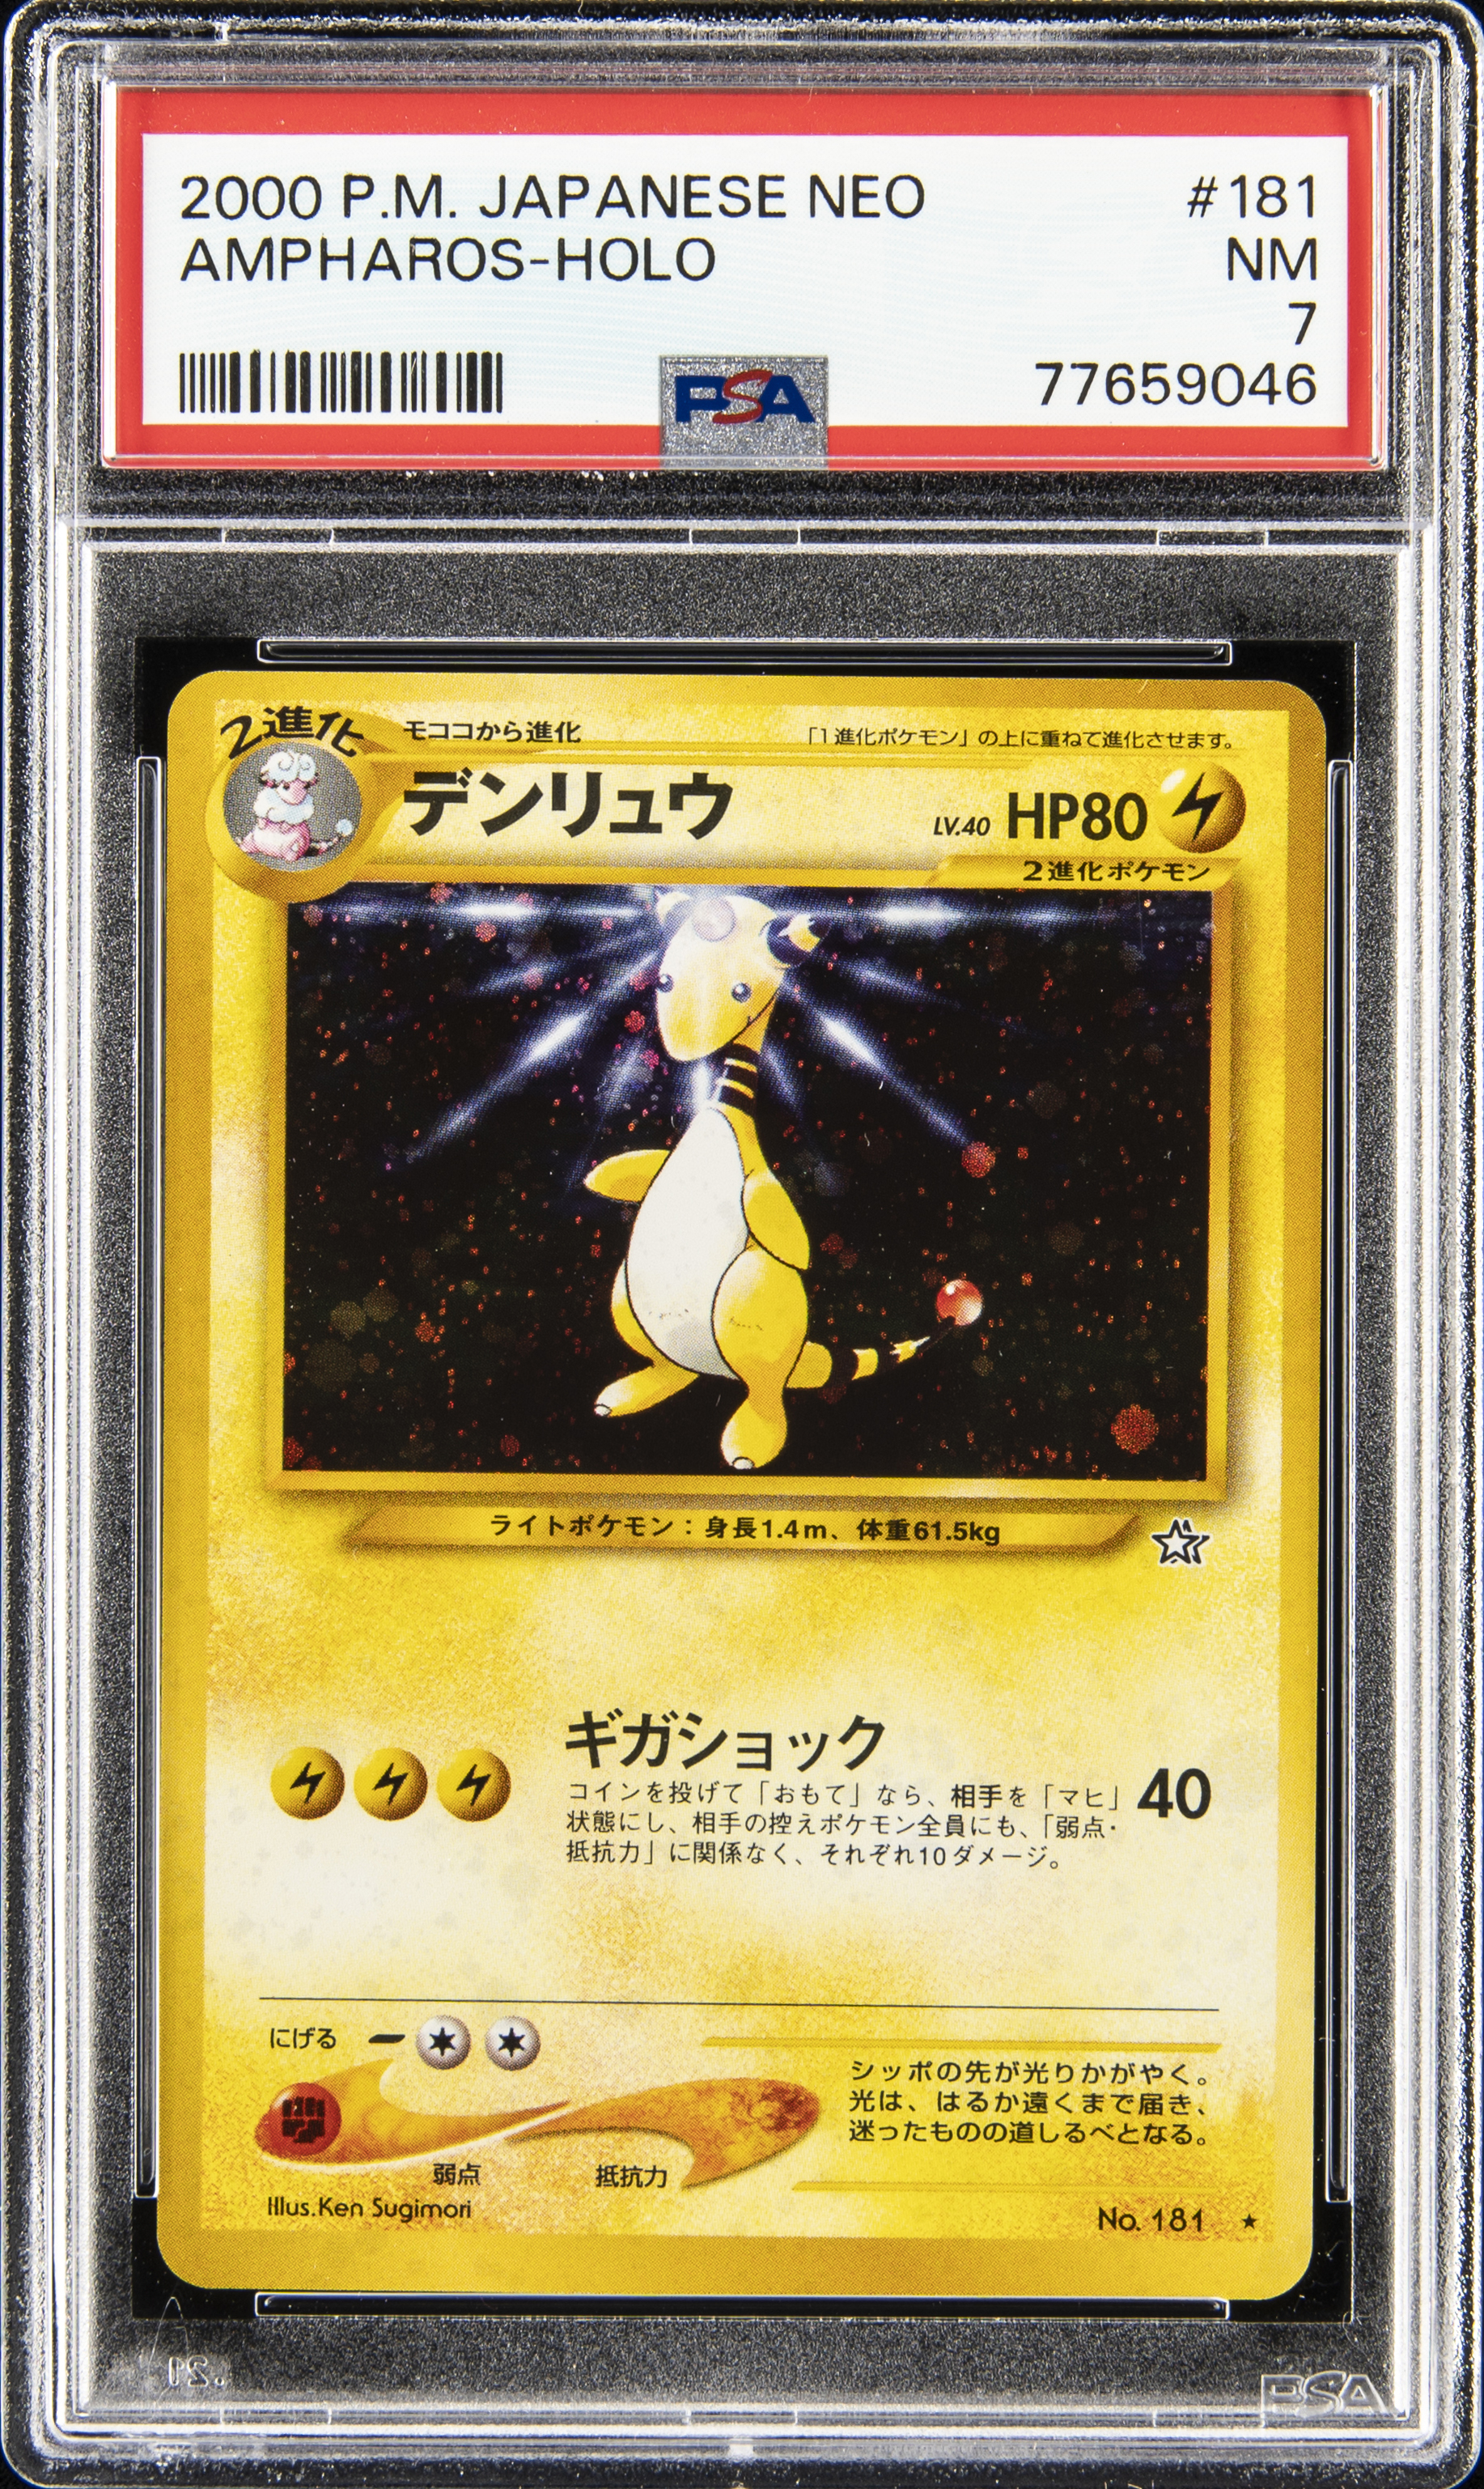 2000 Pokemon Japanese Neo 181 Ampharos-Holo – PSA NM 7